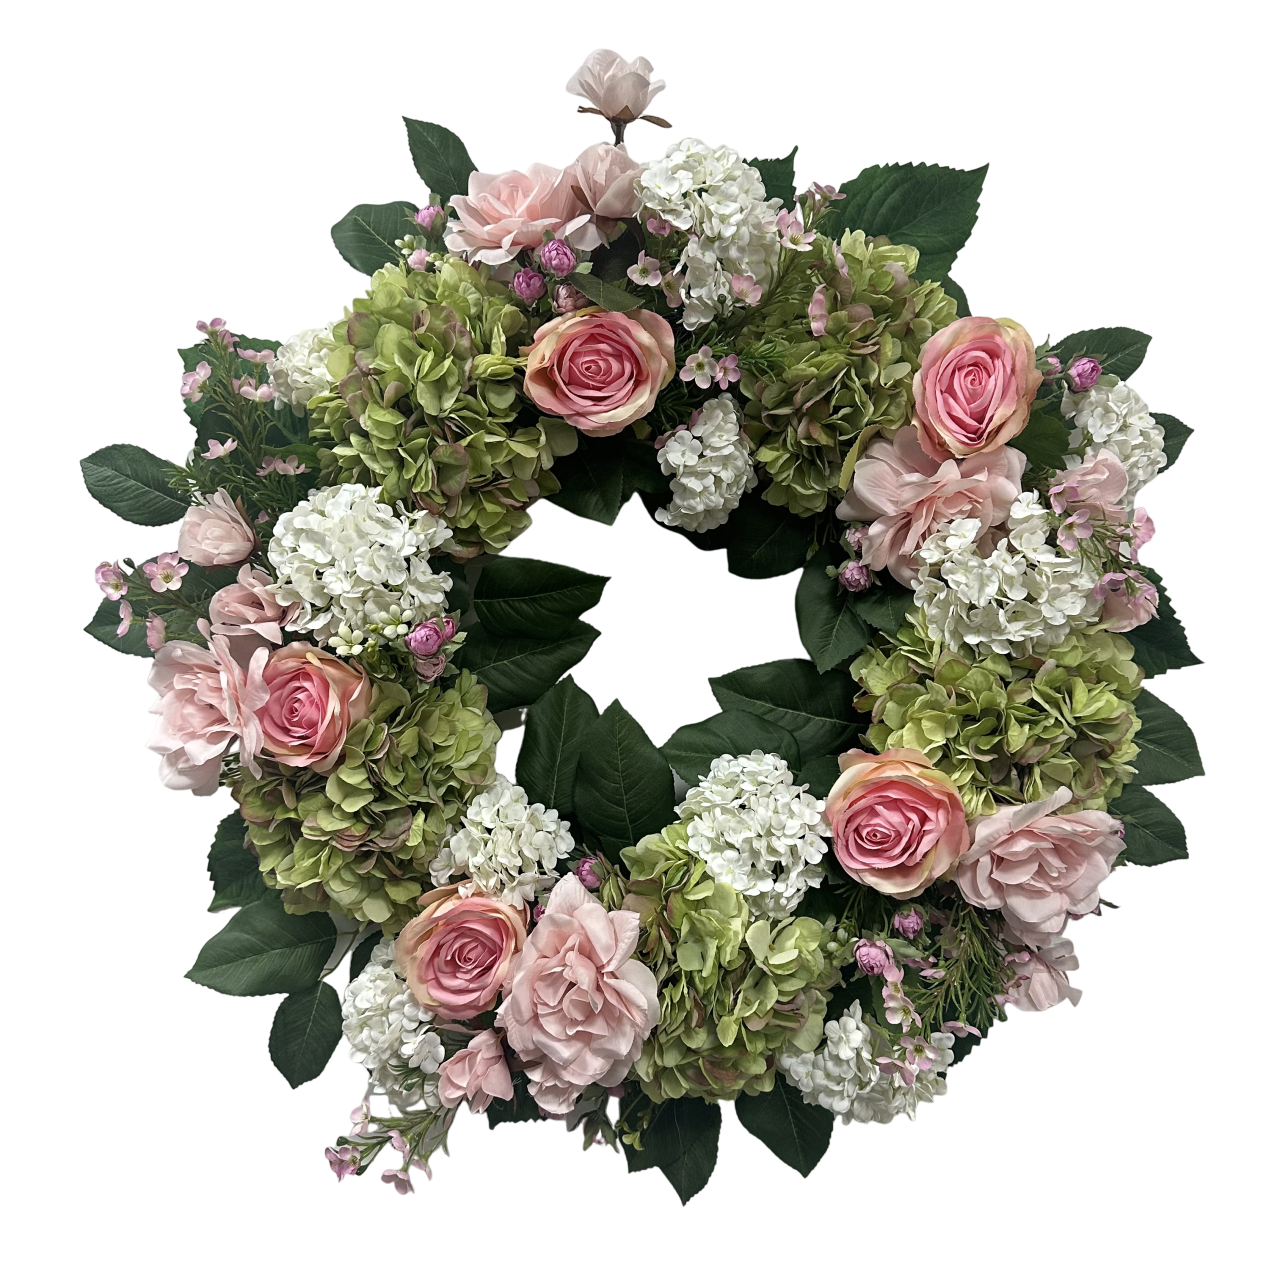 Senmasine hydrangea wreath peony artificial wreaths flowers rose dahlia for front door spring hanging decoration